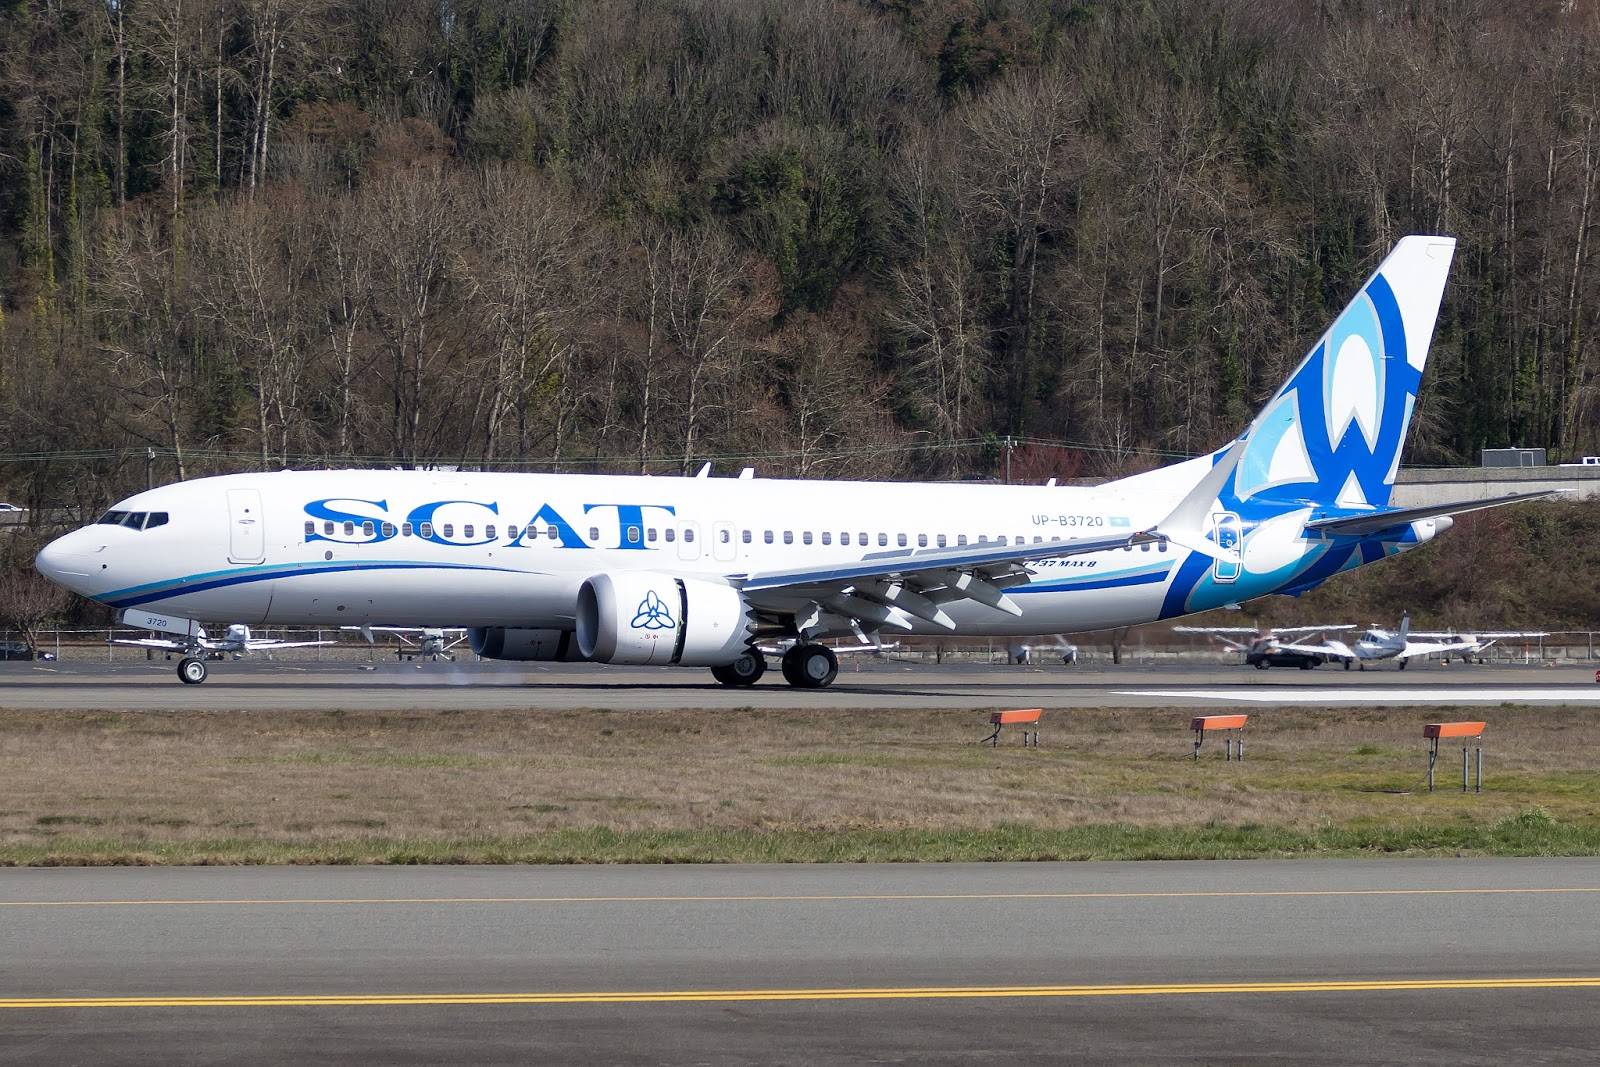 Крупная казахстанская авиакомпания скат эйрлайнс (scat airlines)